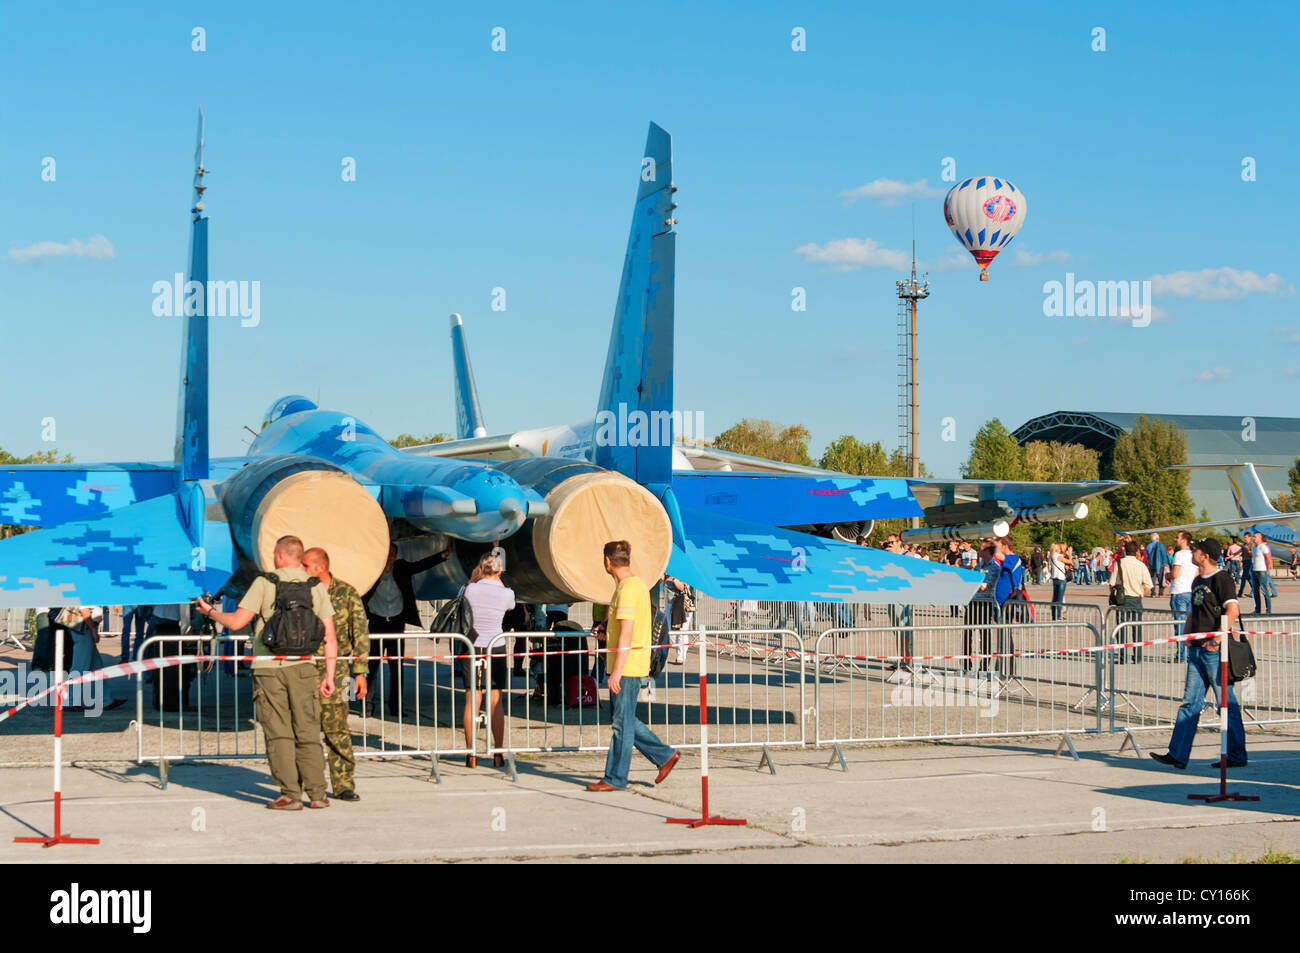 Ukrainian Air Force Su-27 and ballon on exhibition airfield. Stock Photo